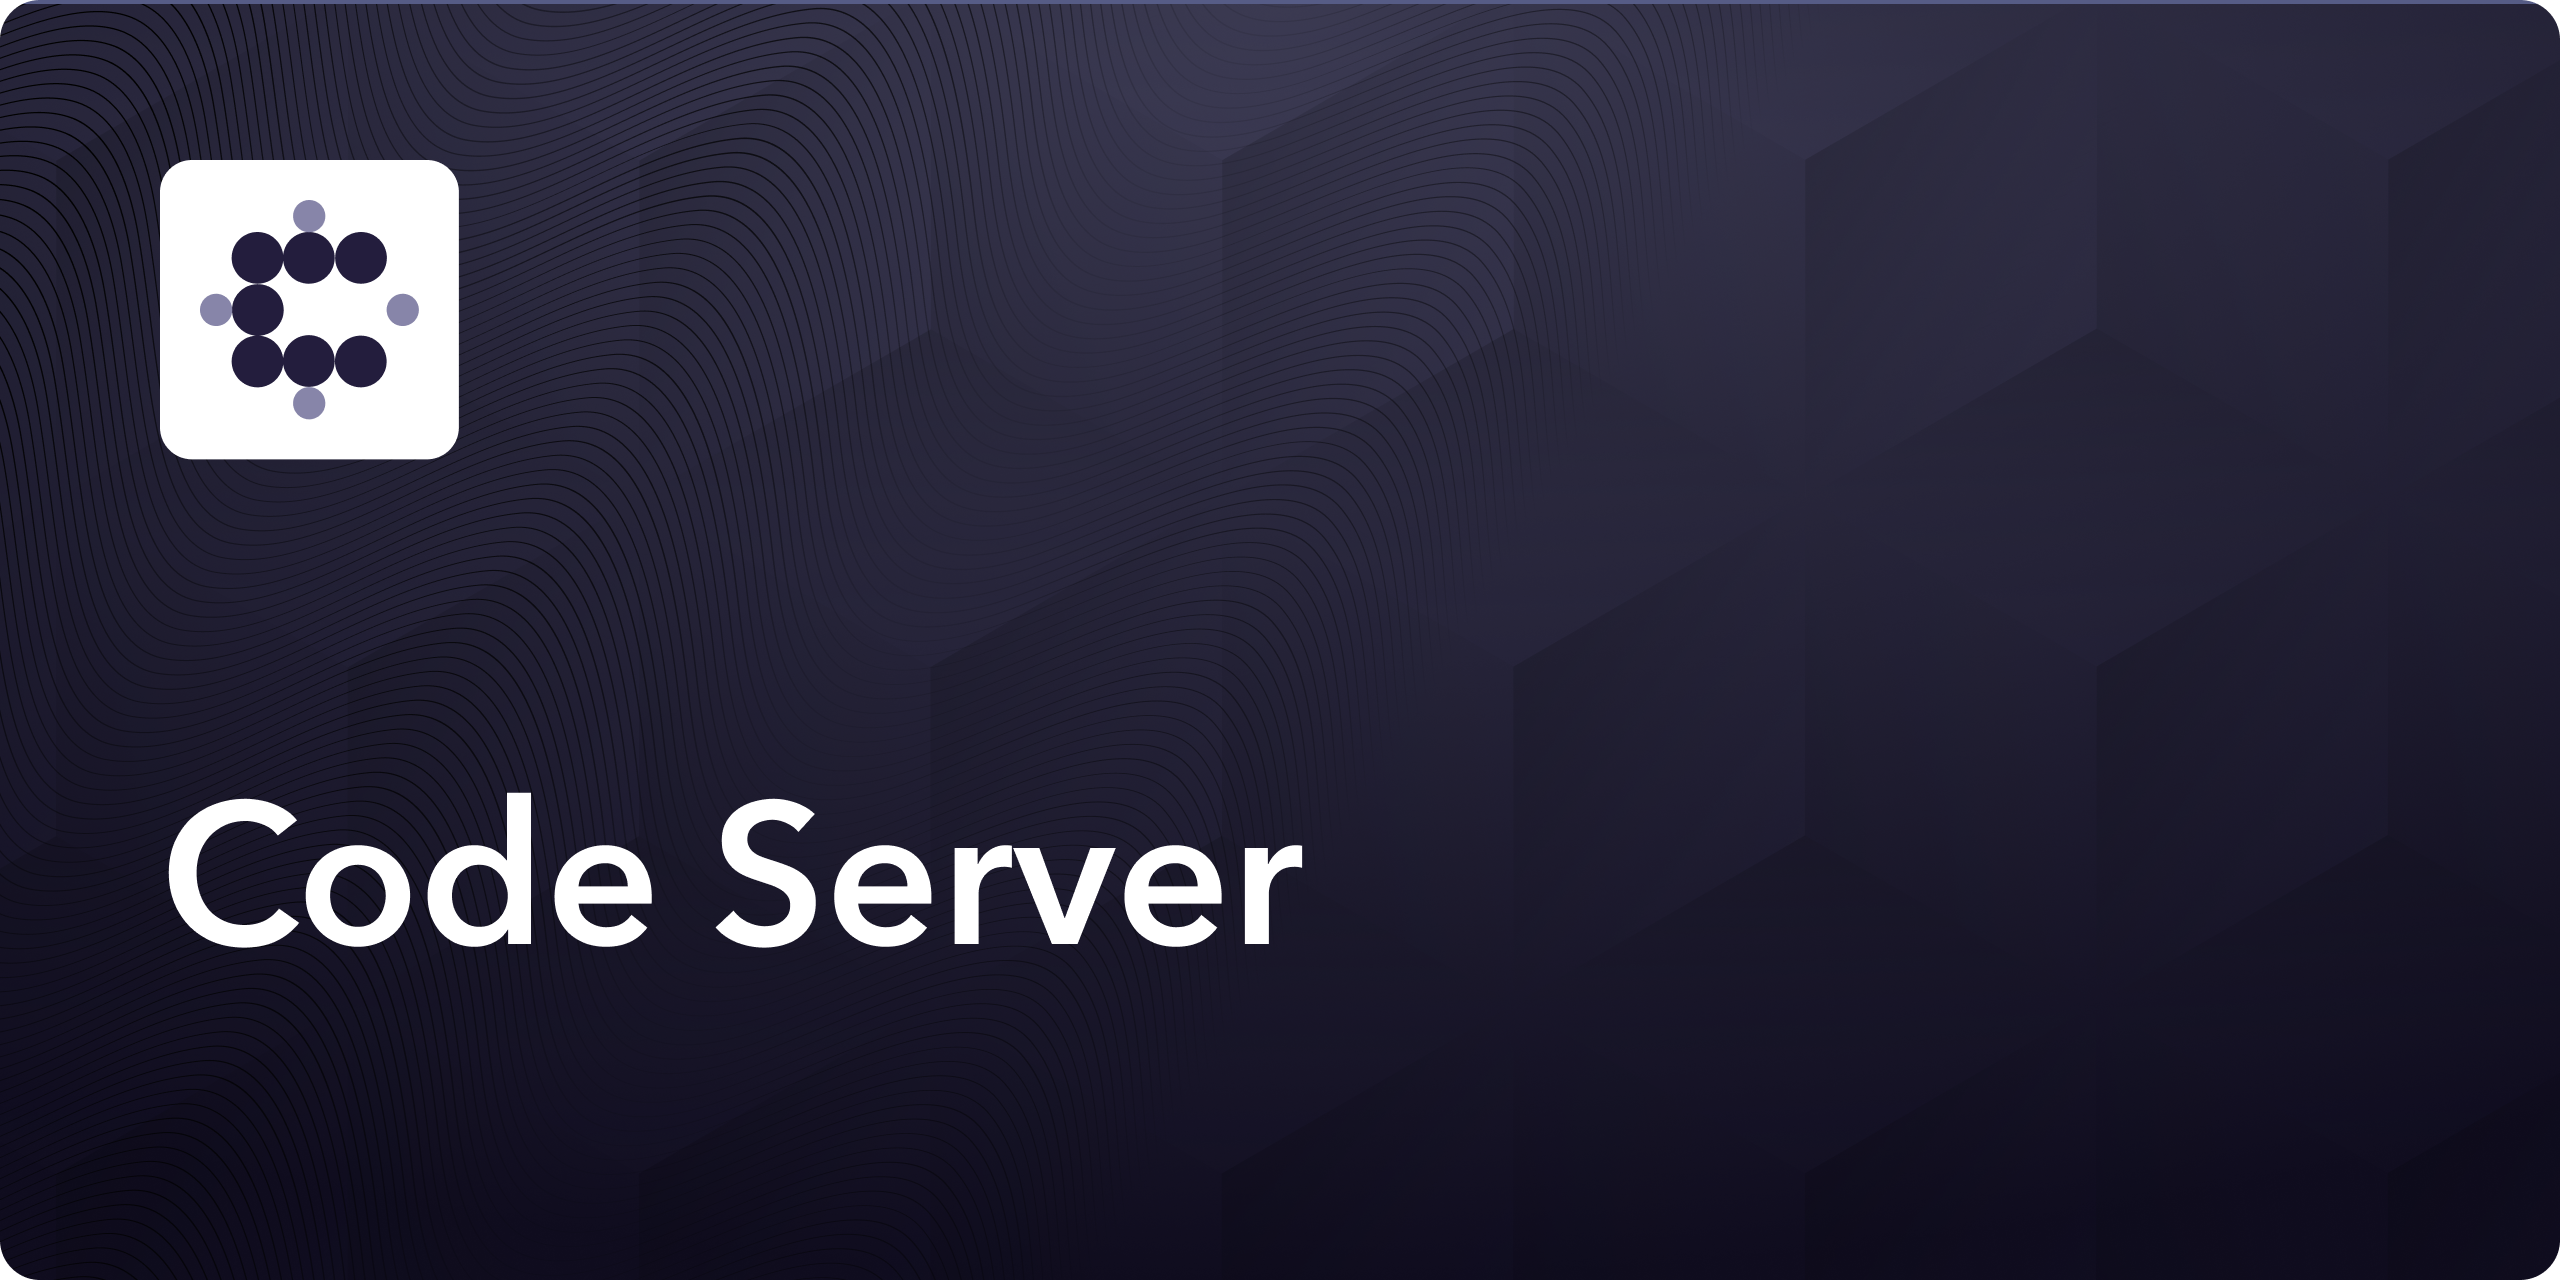 Code Server